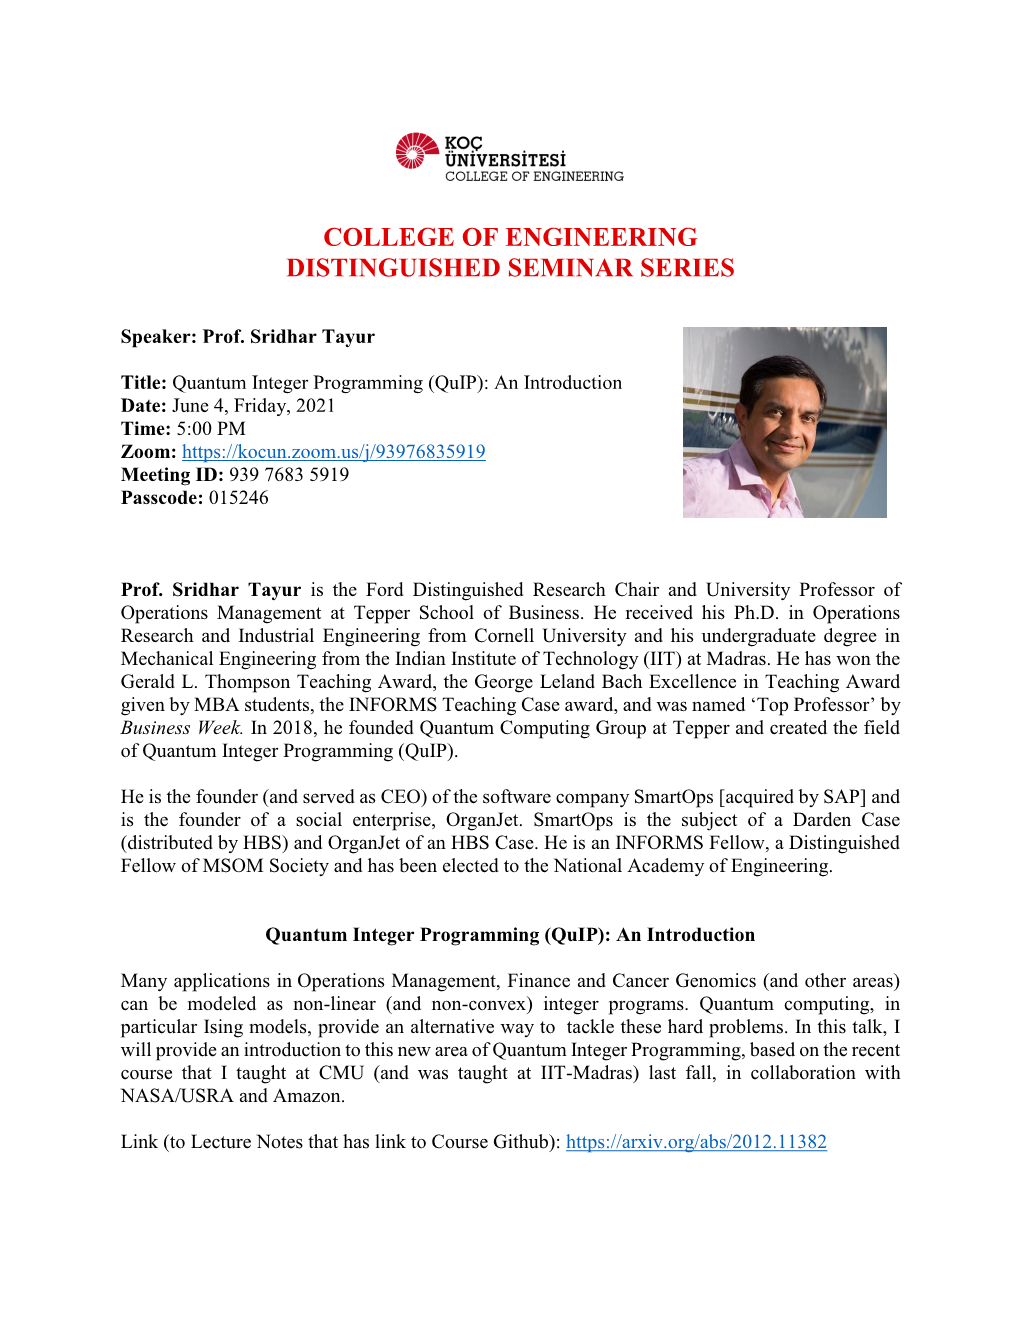 College of Engineering Distinguished Seminar Series